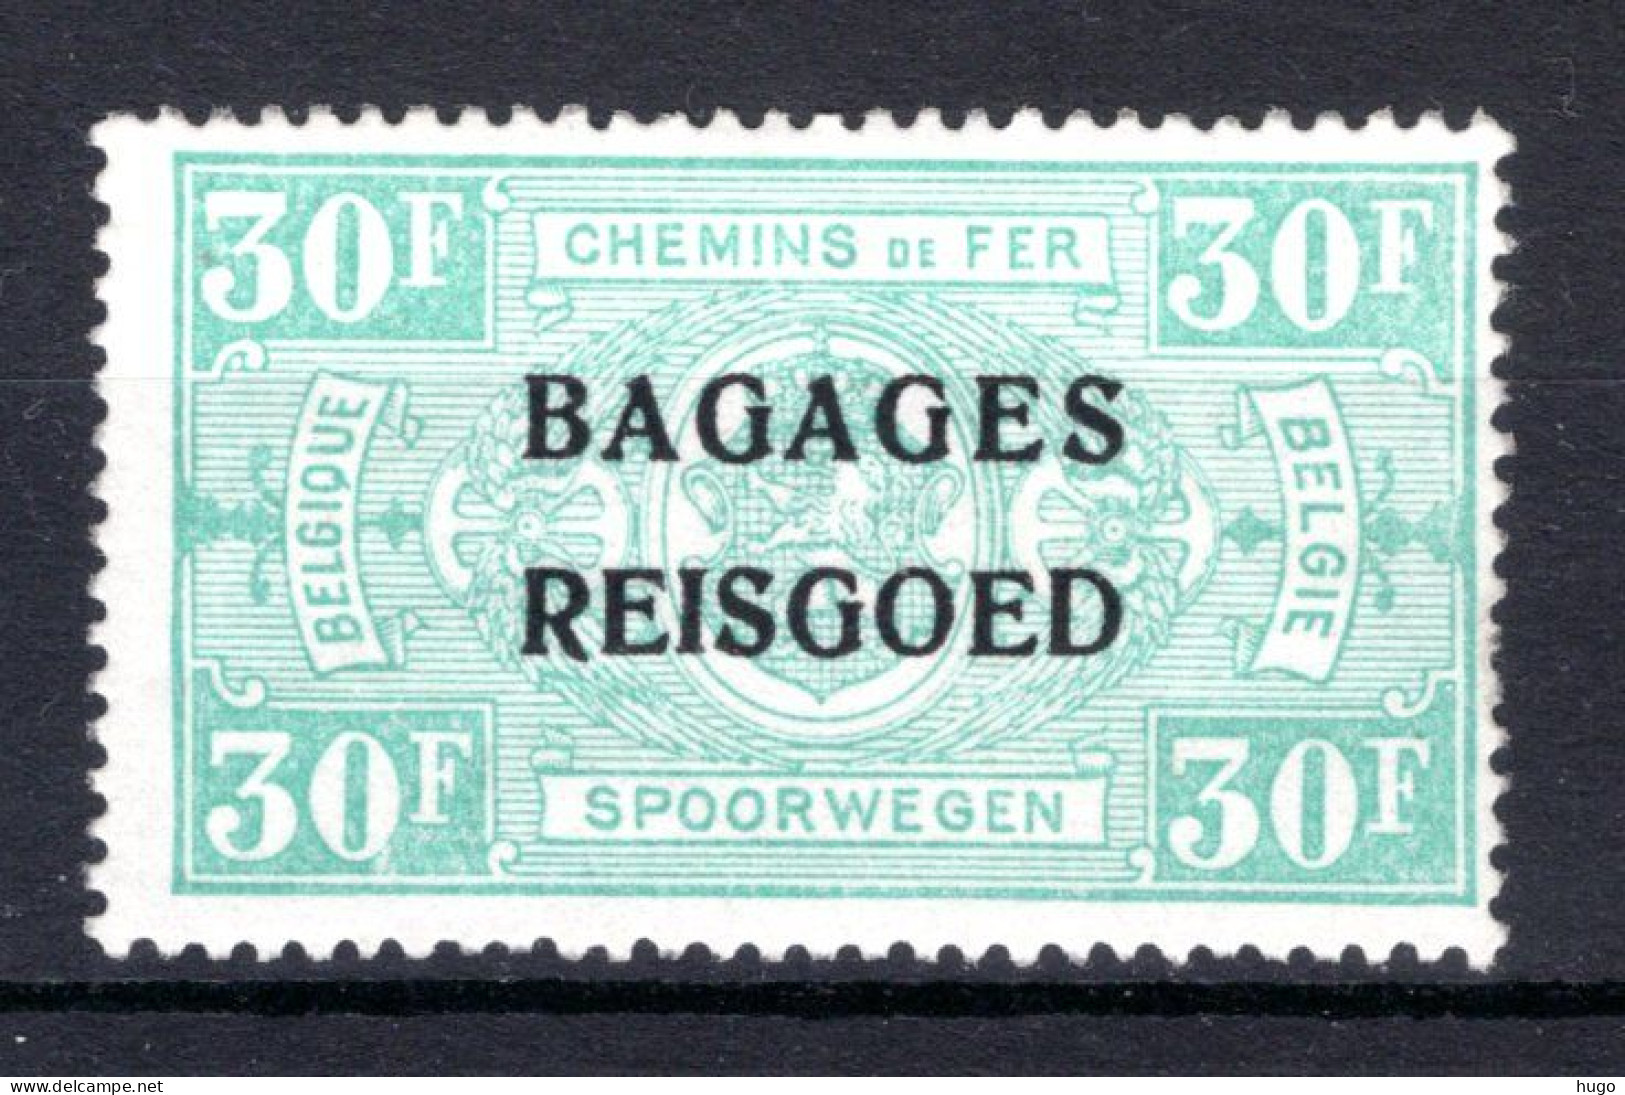 BA21 MNH** 1935 - Spoorwegzegels Met Opdruk "BAGAGES - REISGOED" - Sot  - Bagagli [BA]